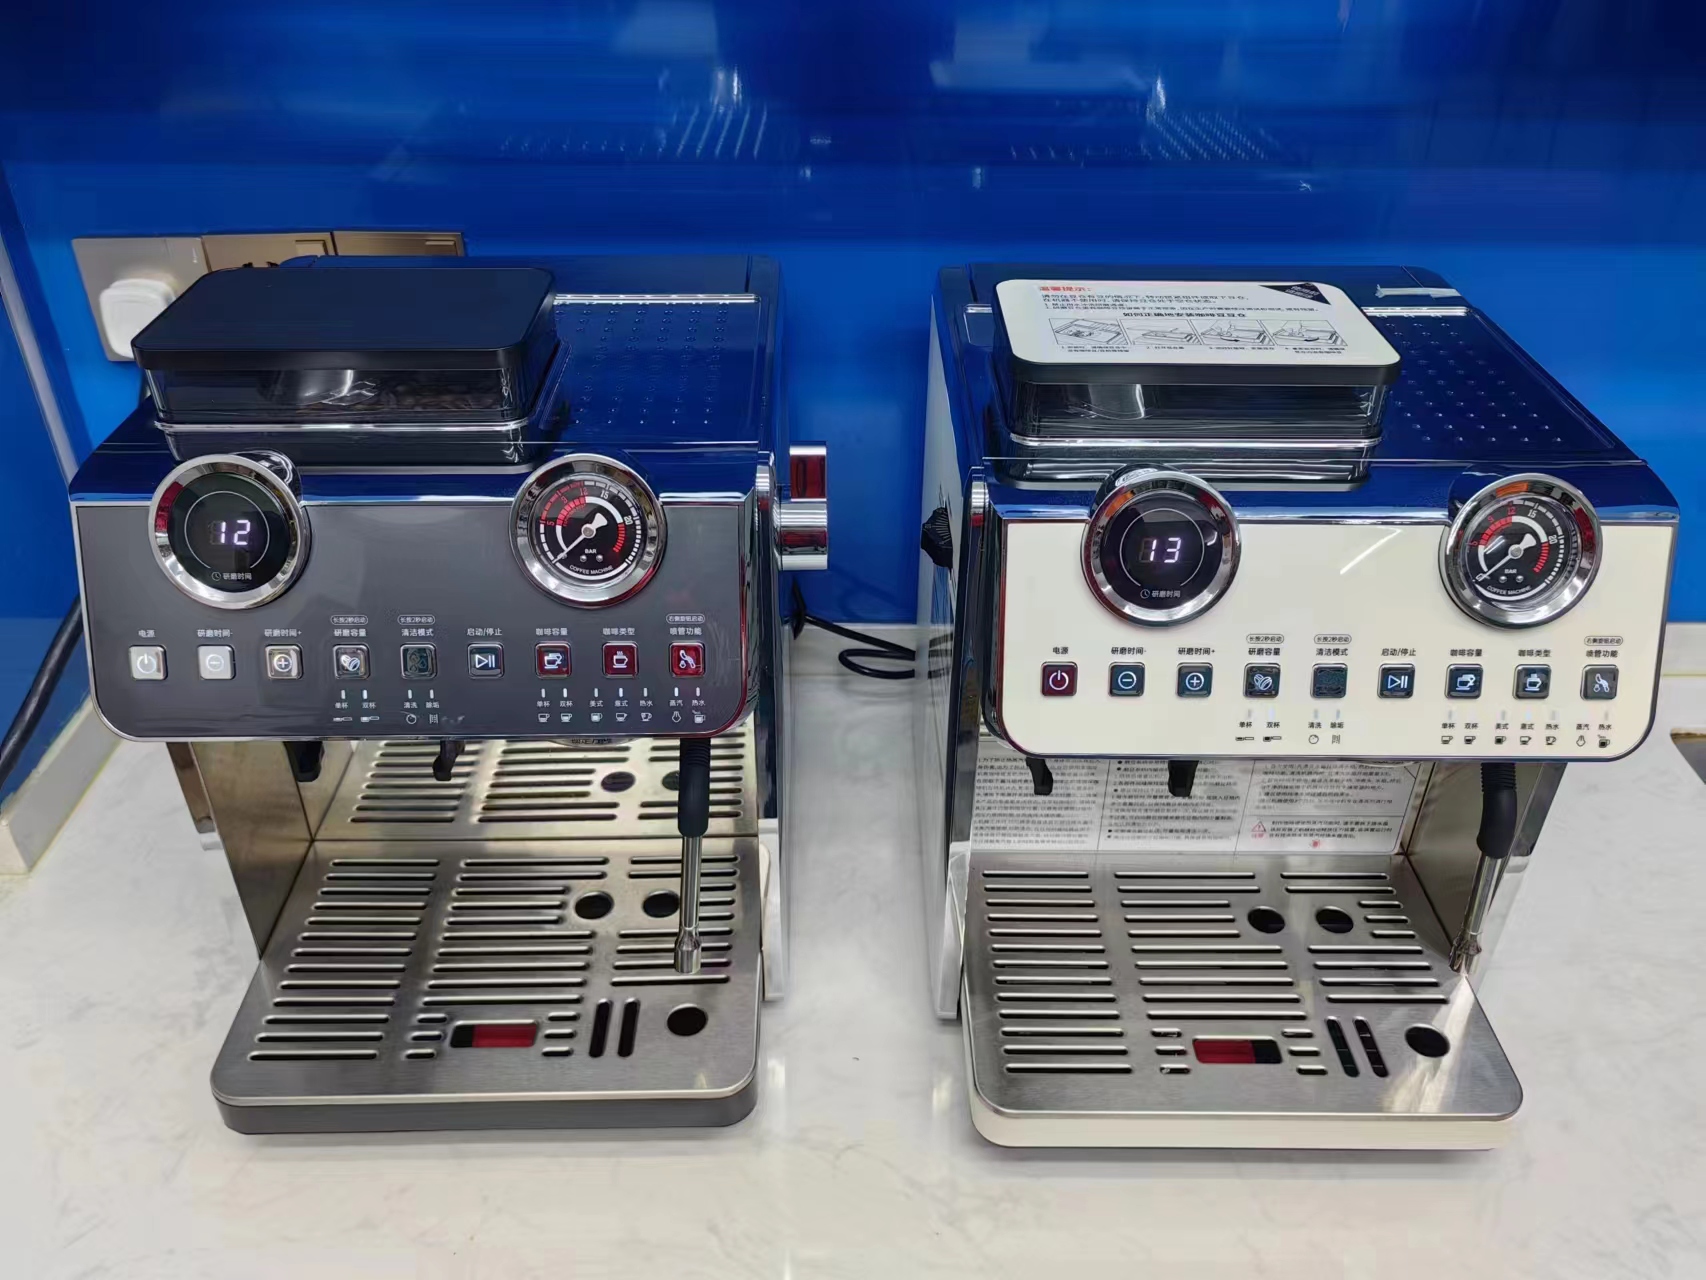 Halbautomatische Espressomaschine